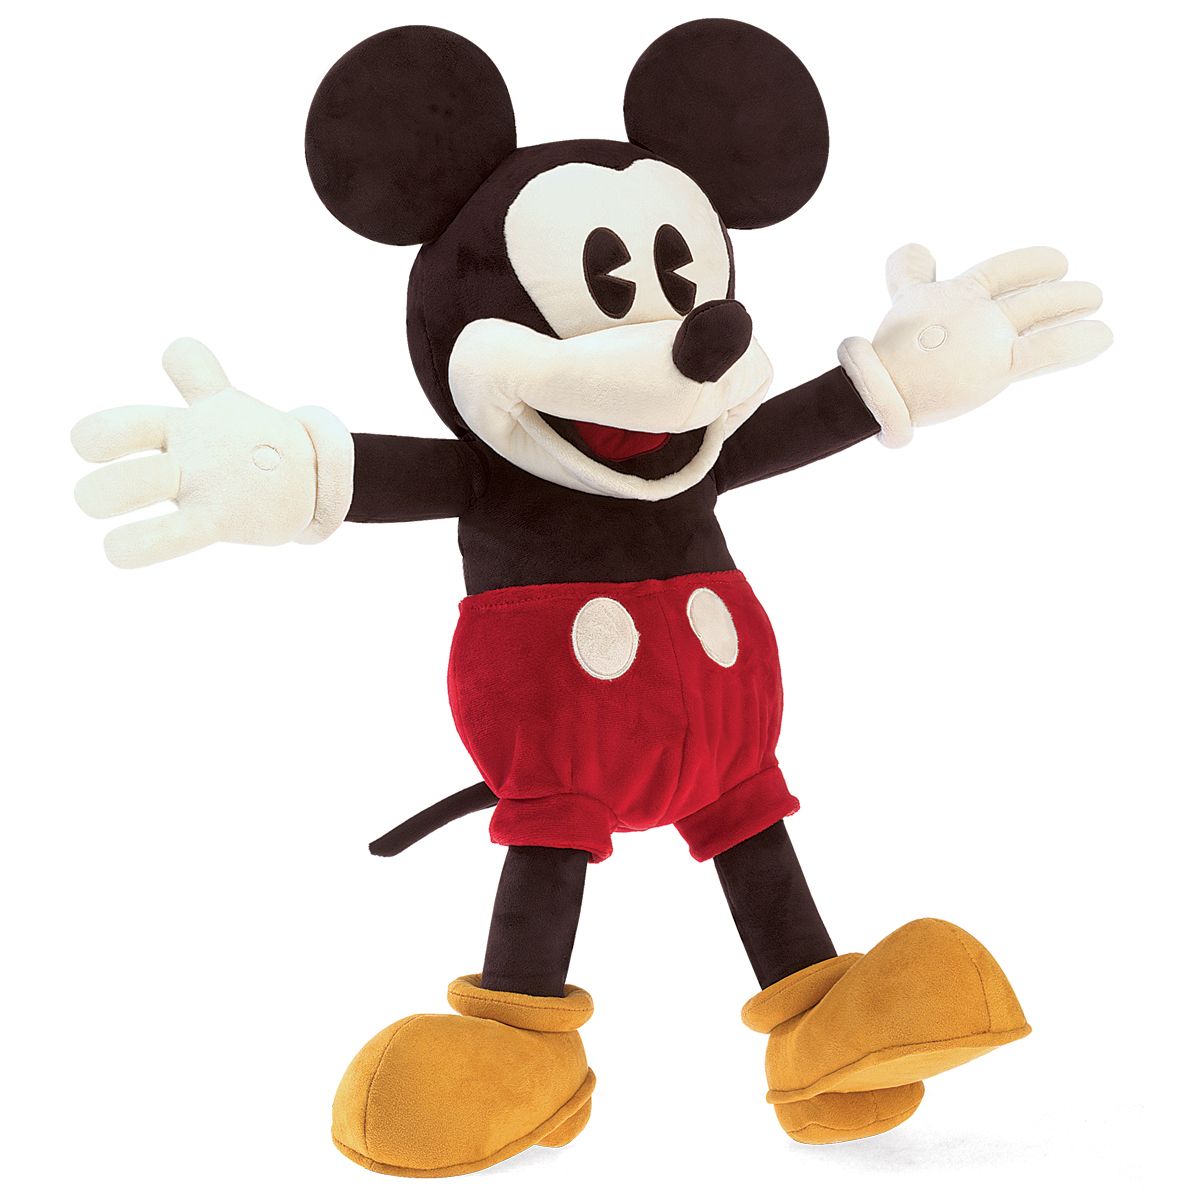 Walmart ウォルマート アメリカ 卸売り 米国ウォルマート 米国最大規模スーパーマーケットWalmart市場店取扱い希望商品のご意見受付中 送料無料 ミッキーマウスパペット その他 Other Puppet 2020A/W新作送料無料 海外直送 Mouse Mickey